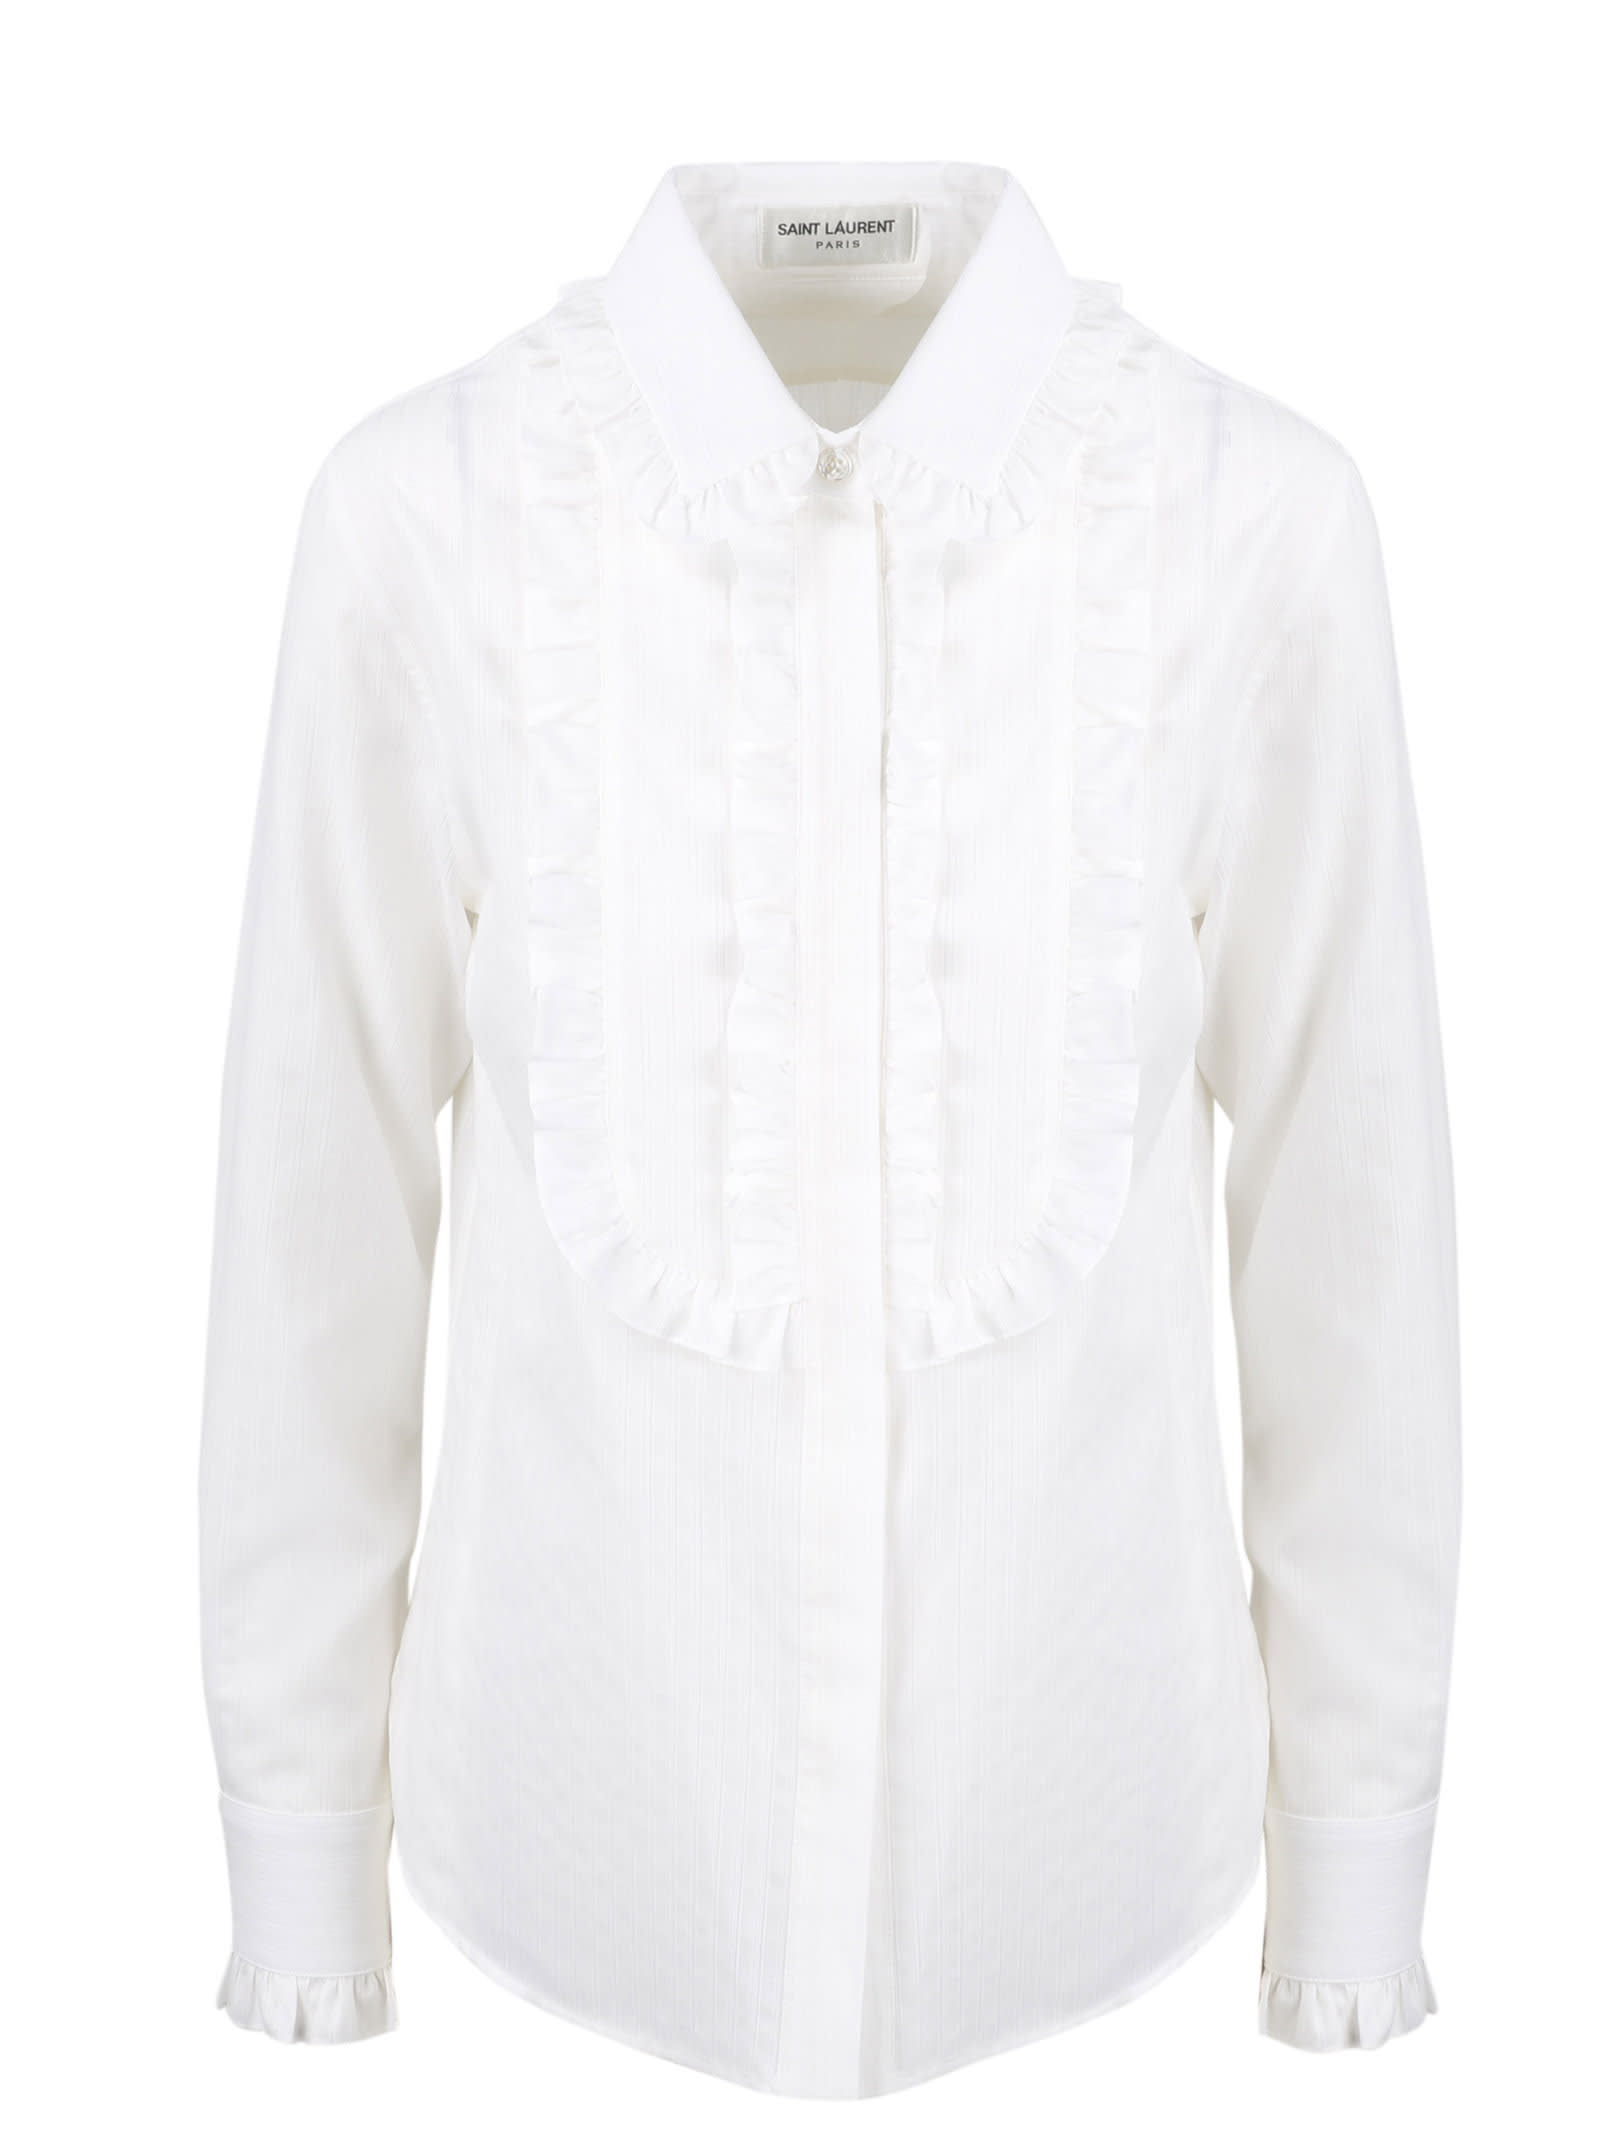 Saint Laurent Striped Jacquard Shirt